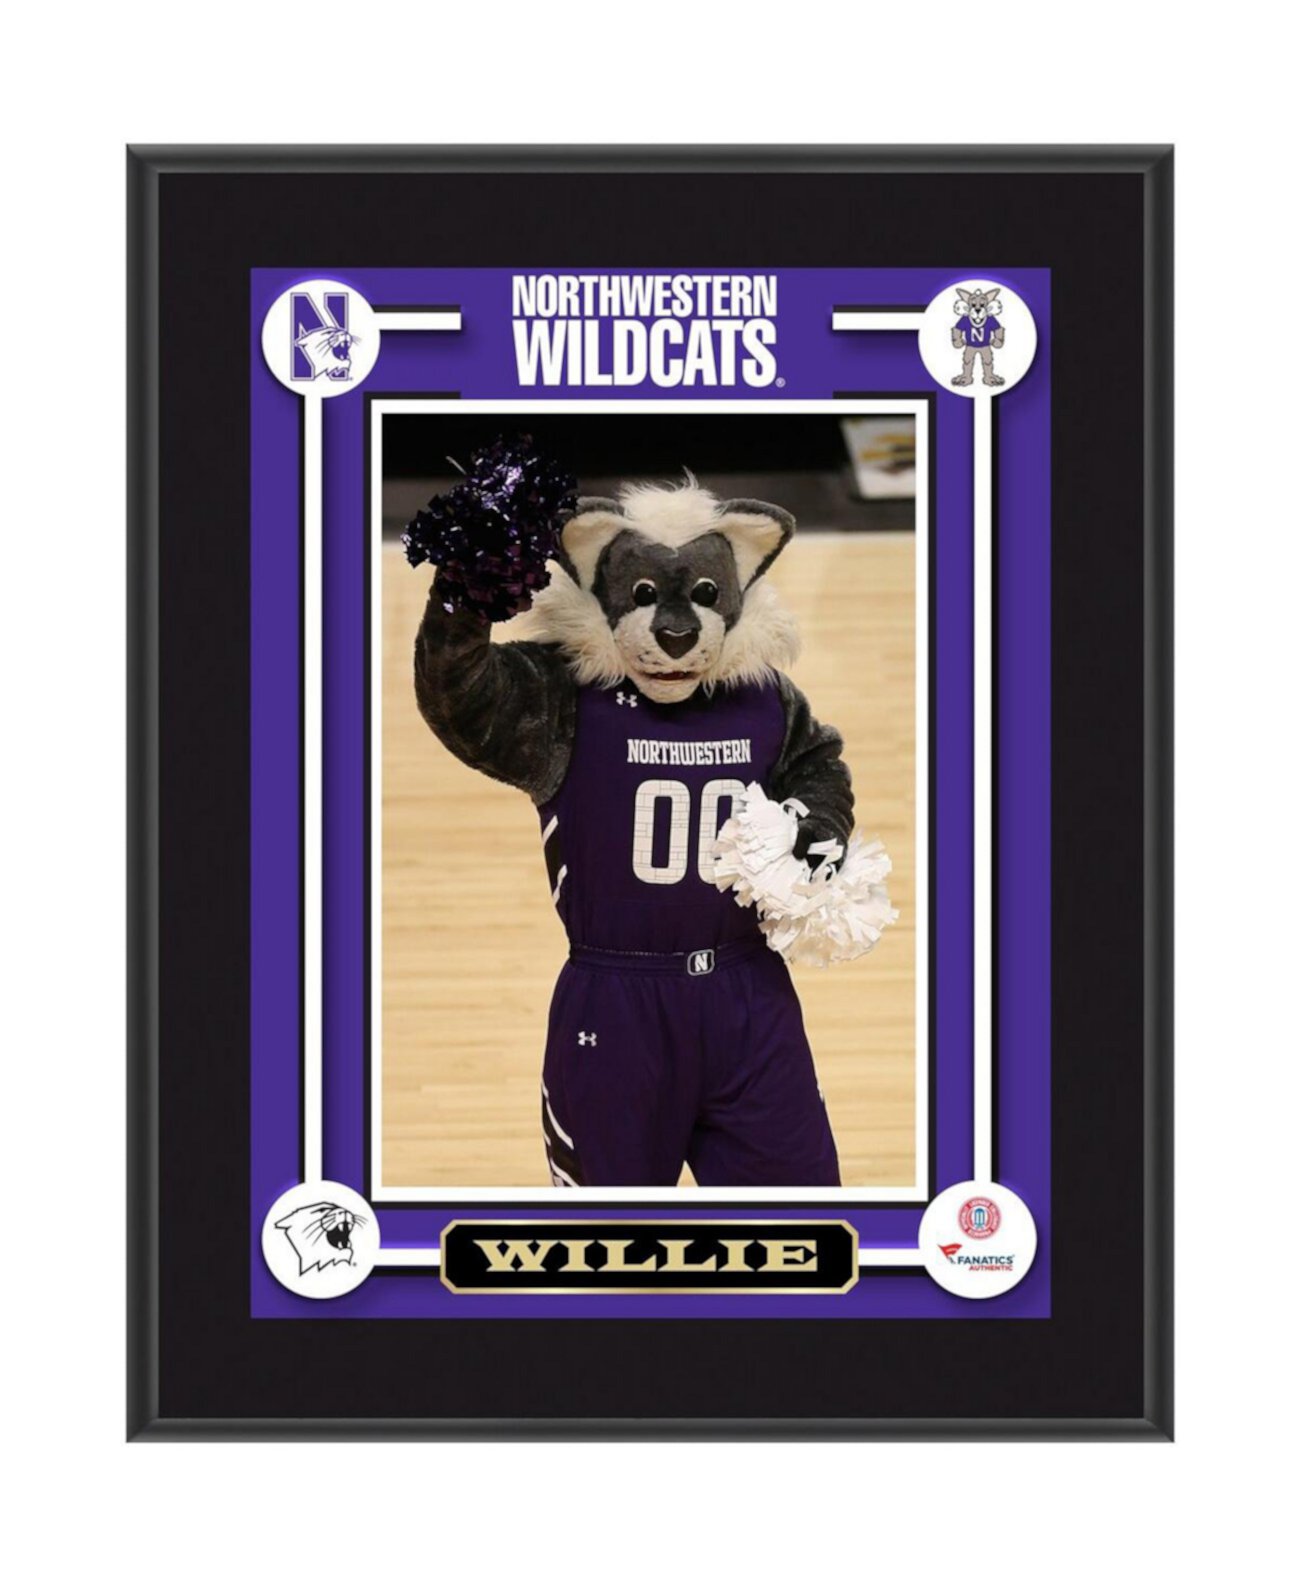 Сублимированная табличка North-western Wildcats Willie Mascot размером 10,5 x 13 дюймов Fanatics Authentic